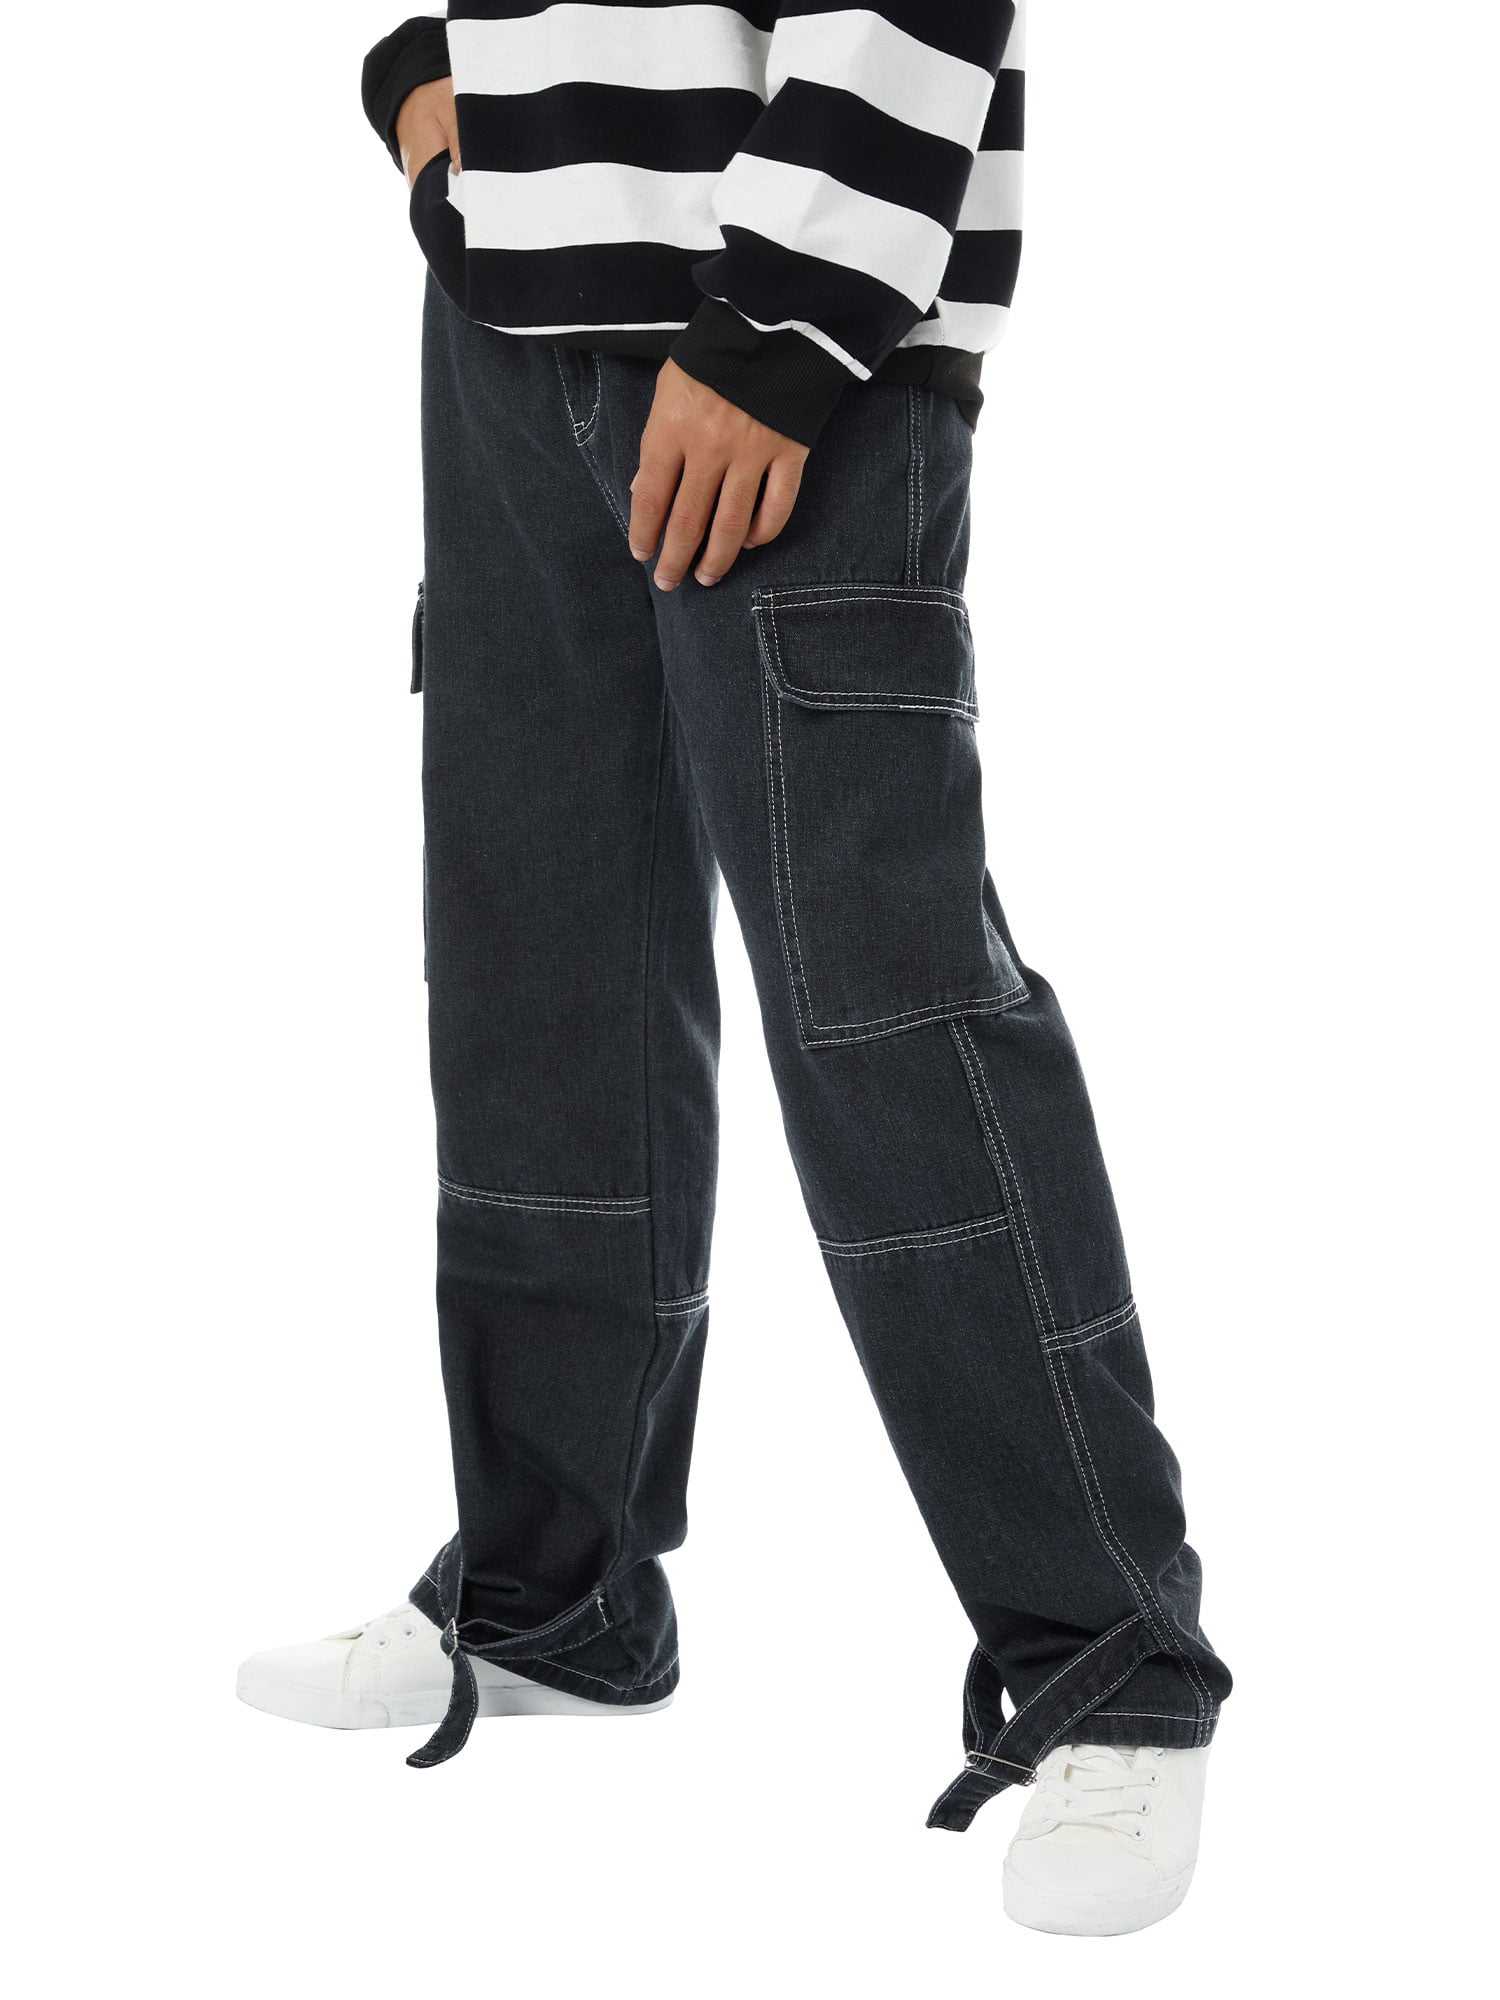 HIP HOP Black Blue Baggy Denim Jeans SkateBoarding Men Streetwear Pants Trousers 